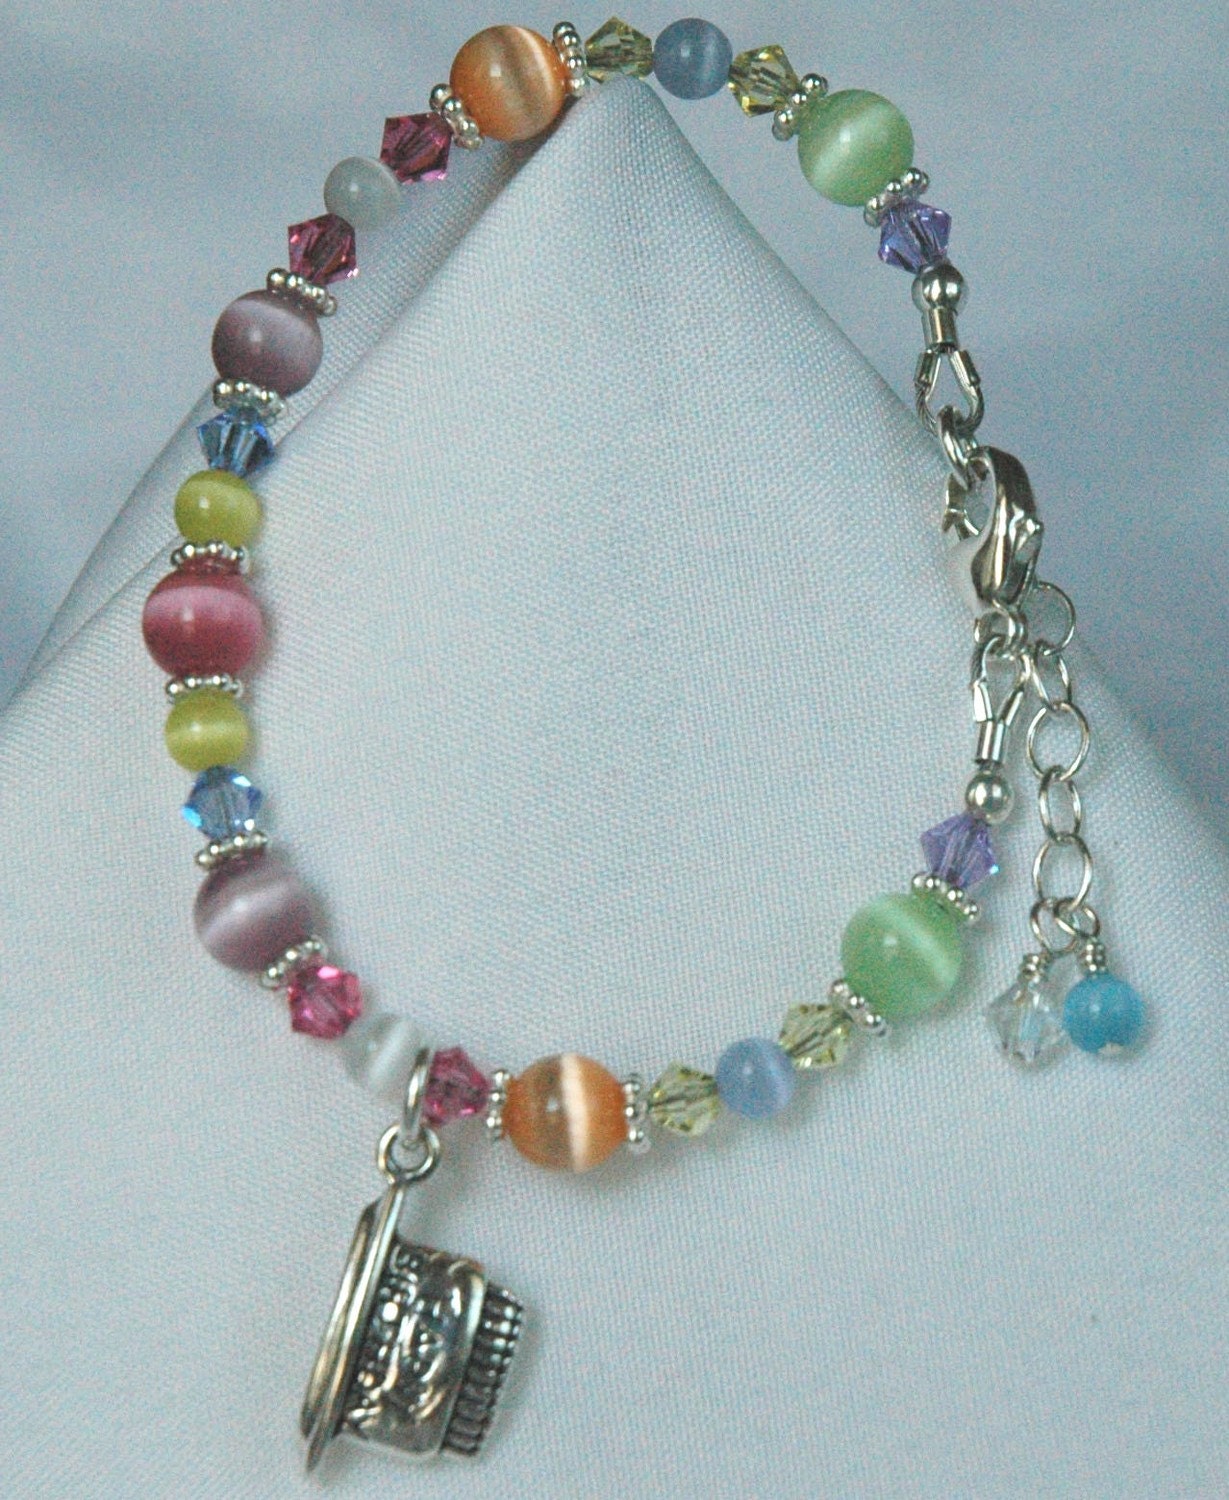 Personalized Pastel Multi Color Cat Eye Initial Bracelet,Initial Colorful Bracelet,Flower Girl Colored Bracelet,Rainbow Little Girl Bracelet